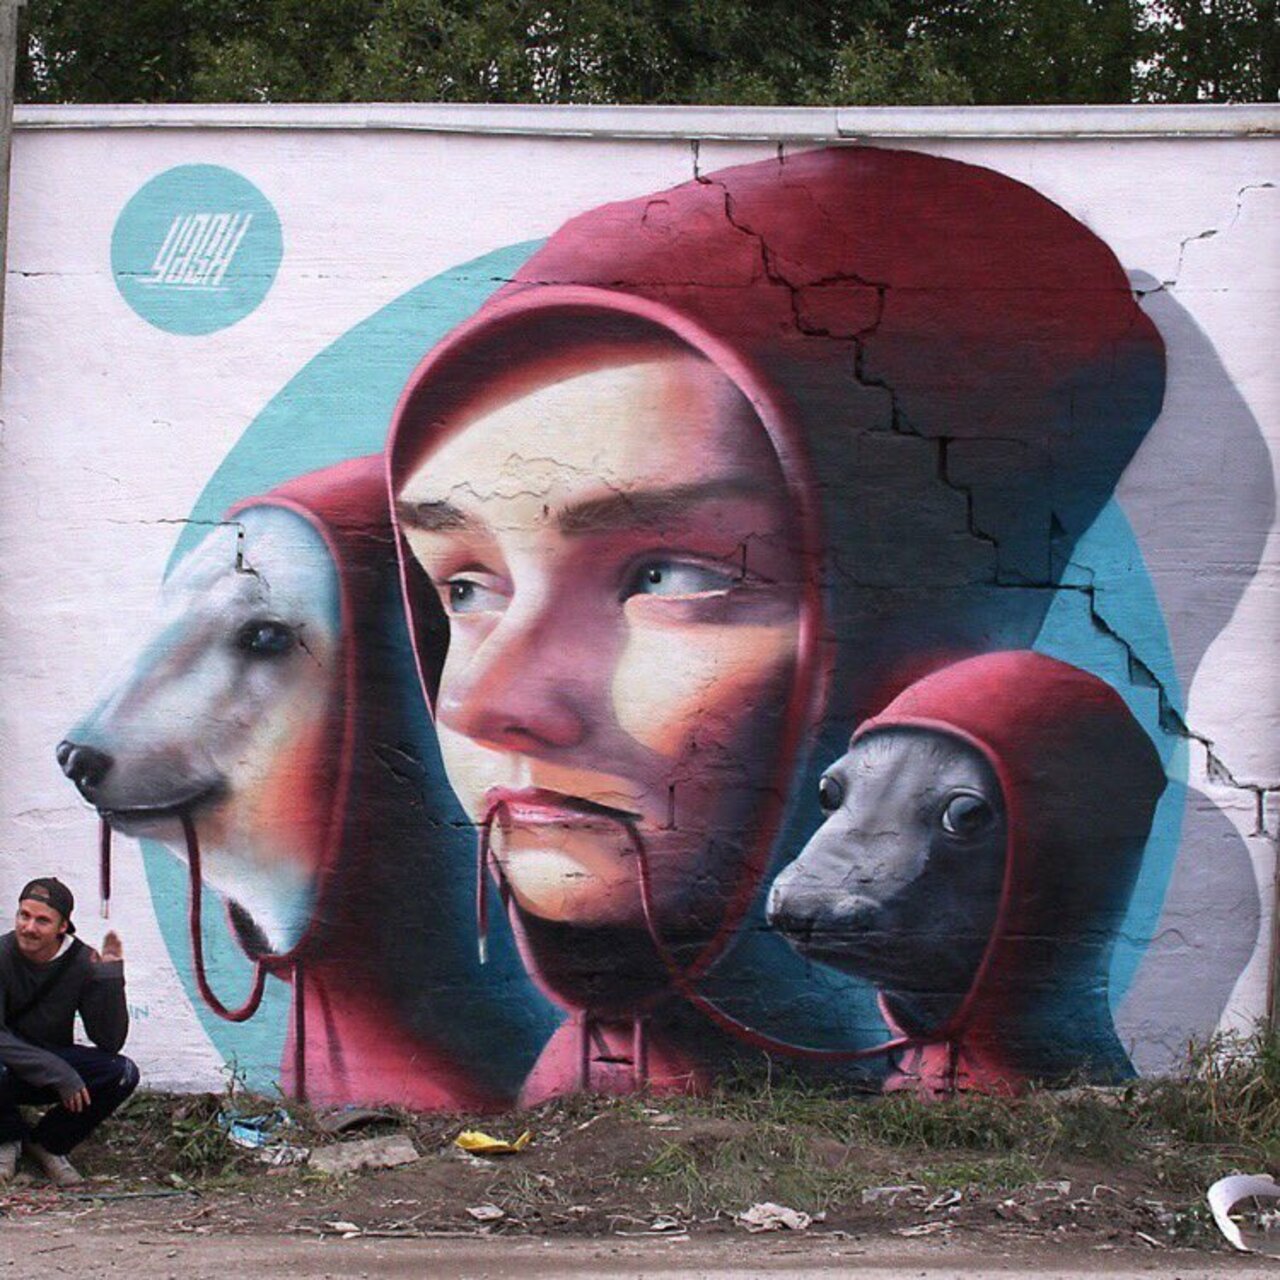 Mural by Yash #stockholm #Sweden #art #graffiti #mural #streetart #urbanart https://t.co/Ct6LO813TG